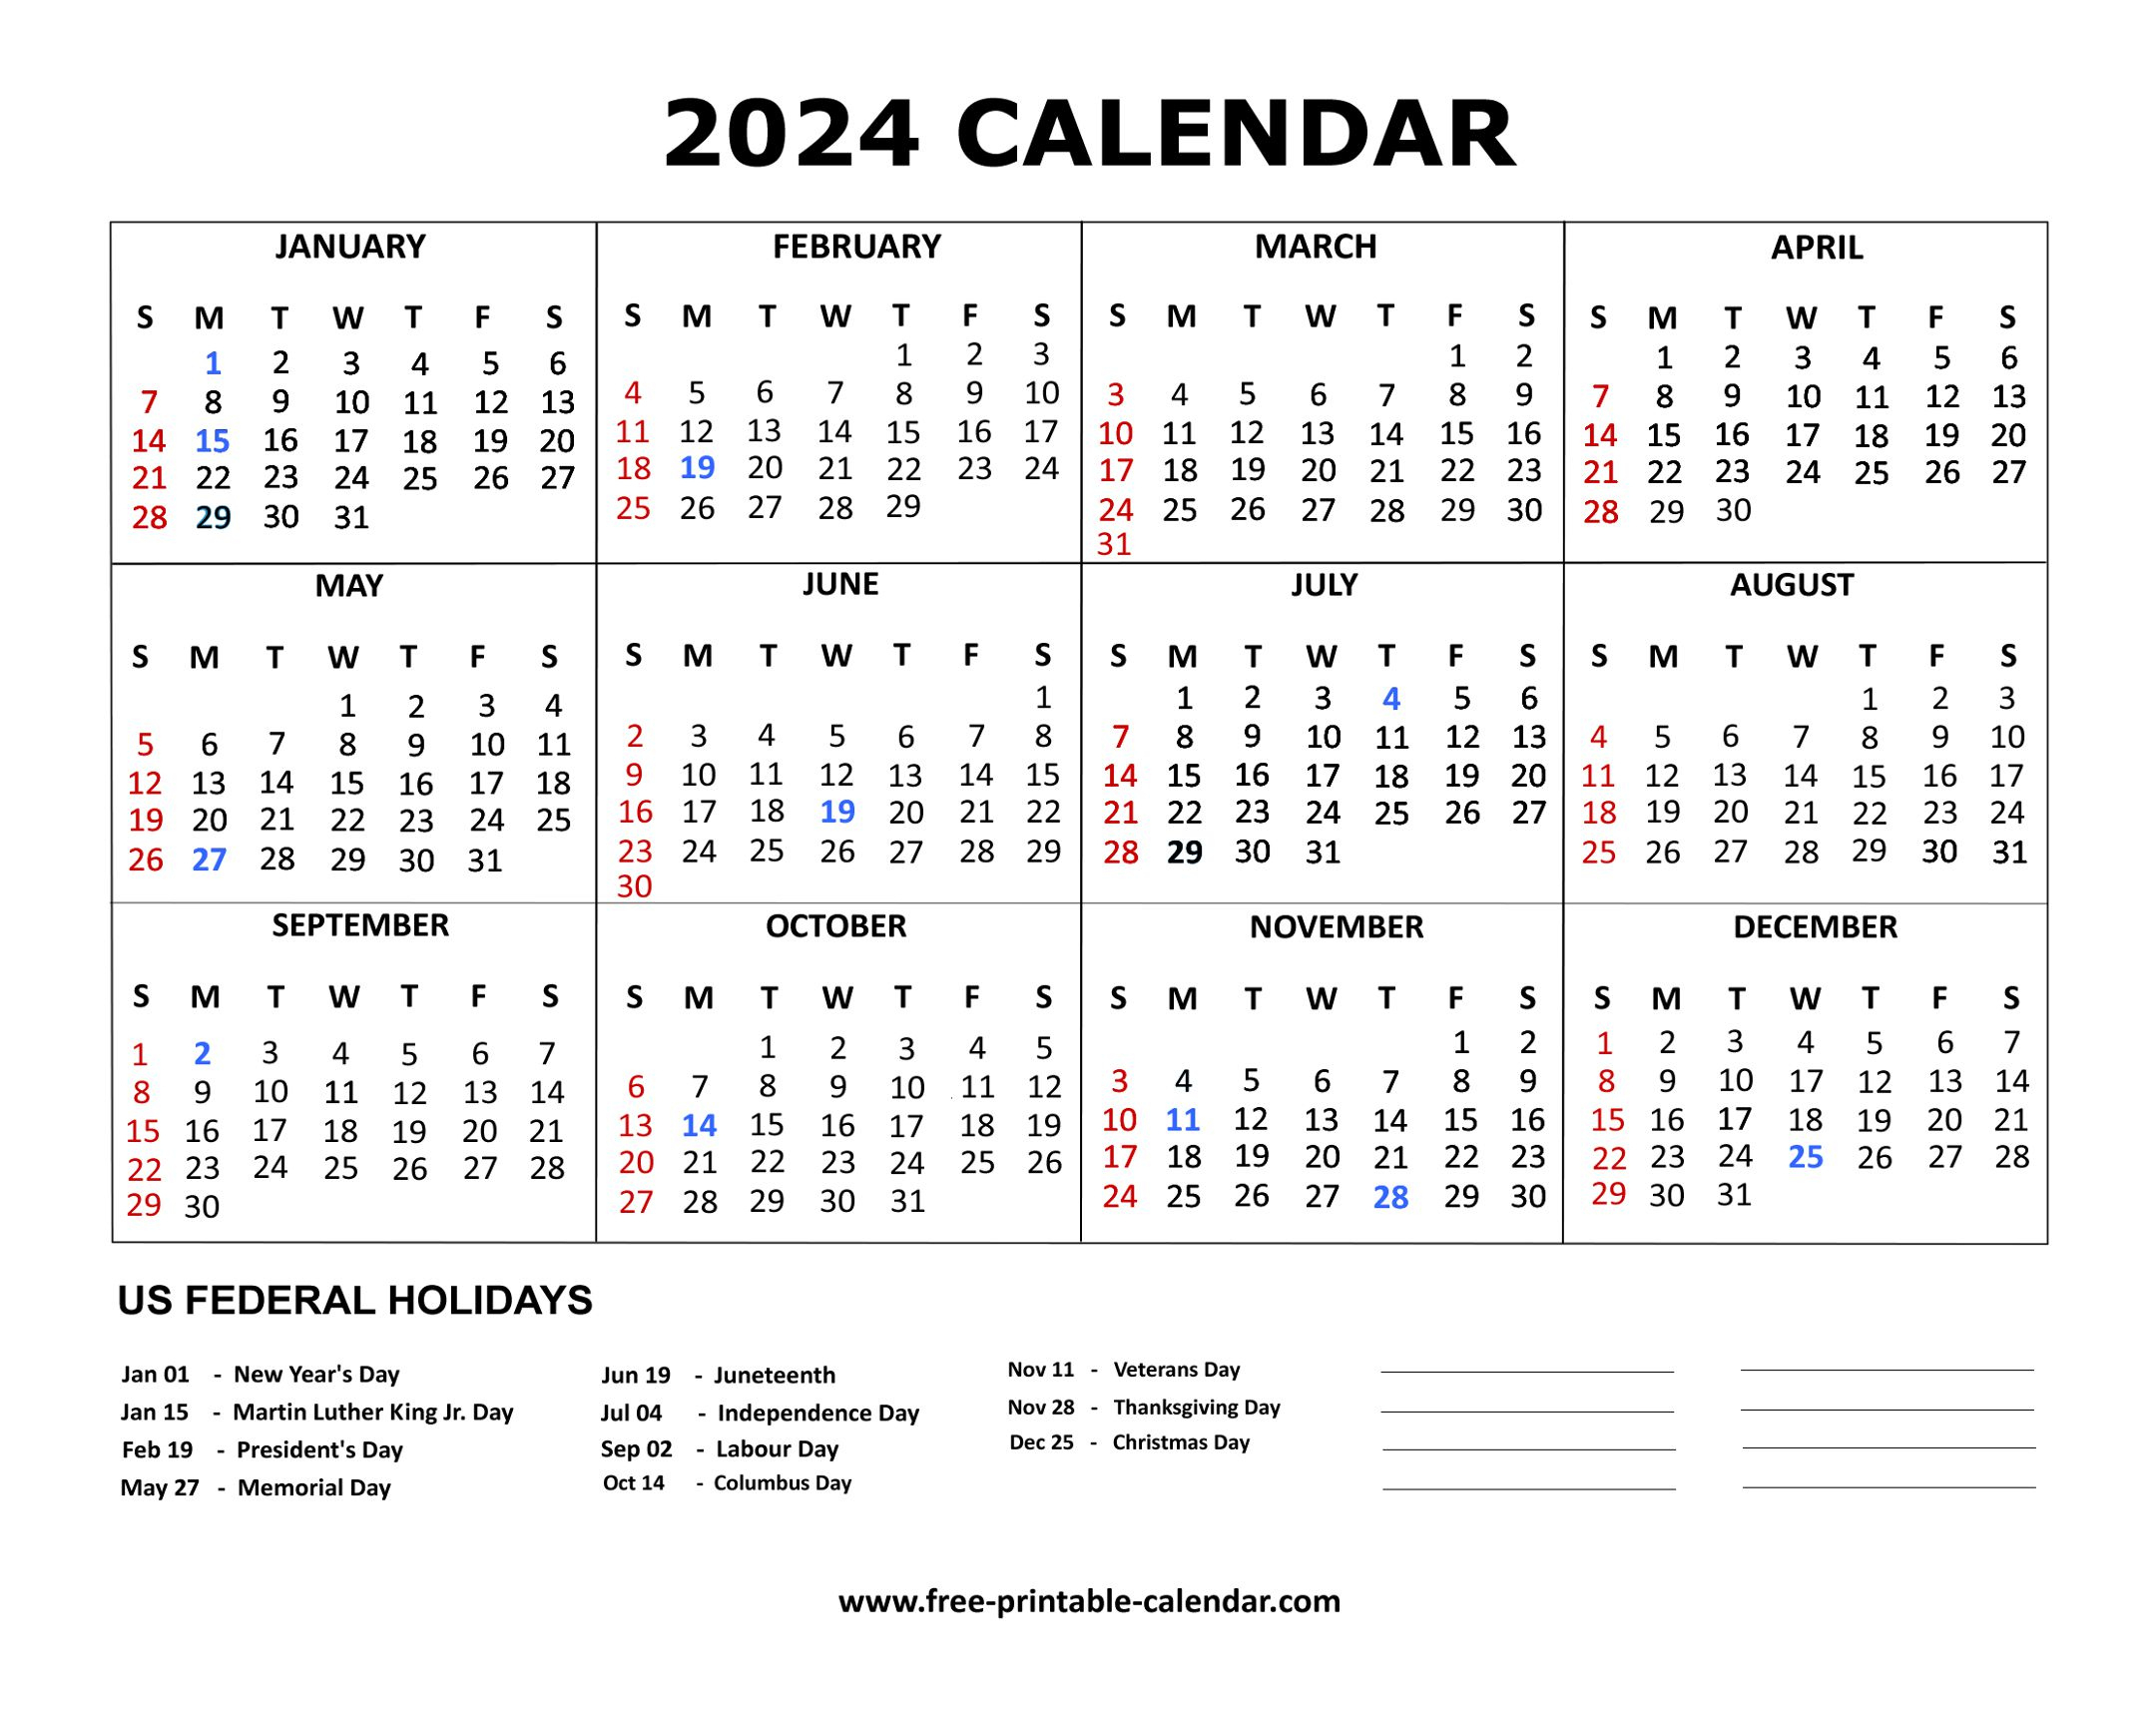 2024 Calendar | Printable Calendar 2024 With Federal Holidays